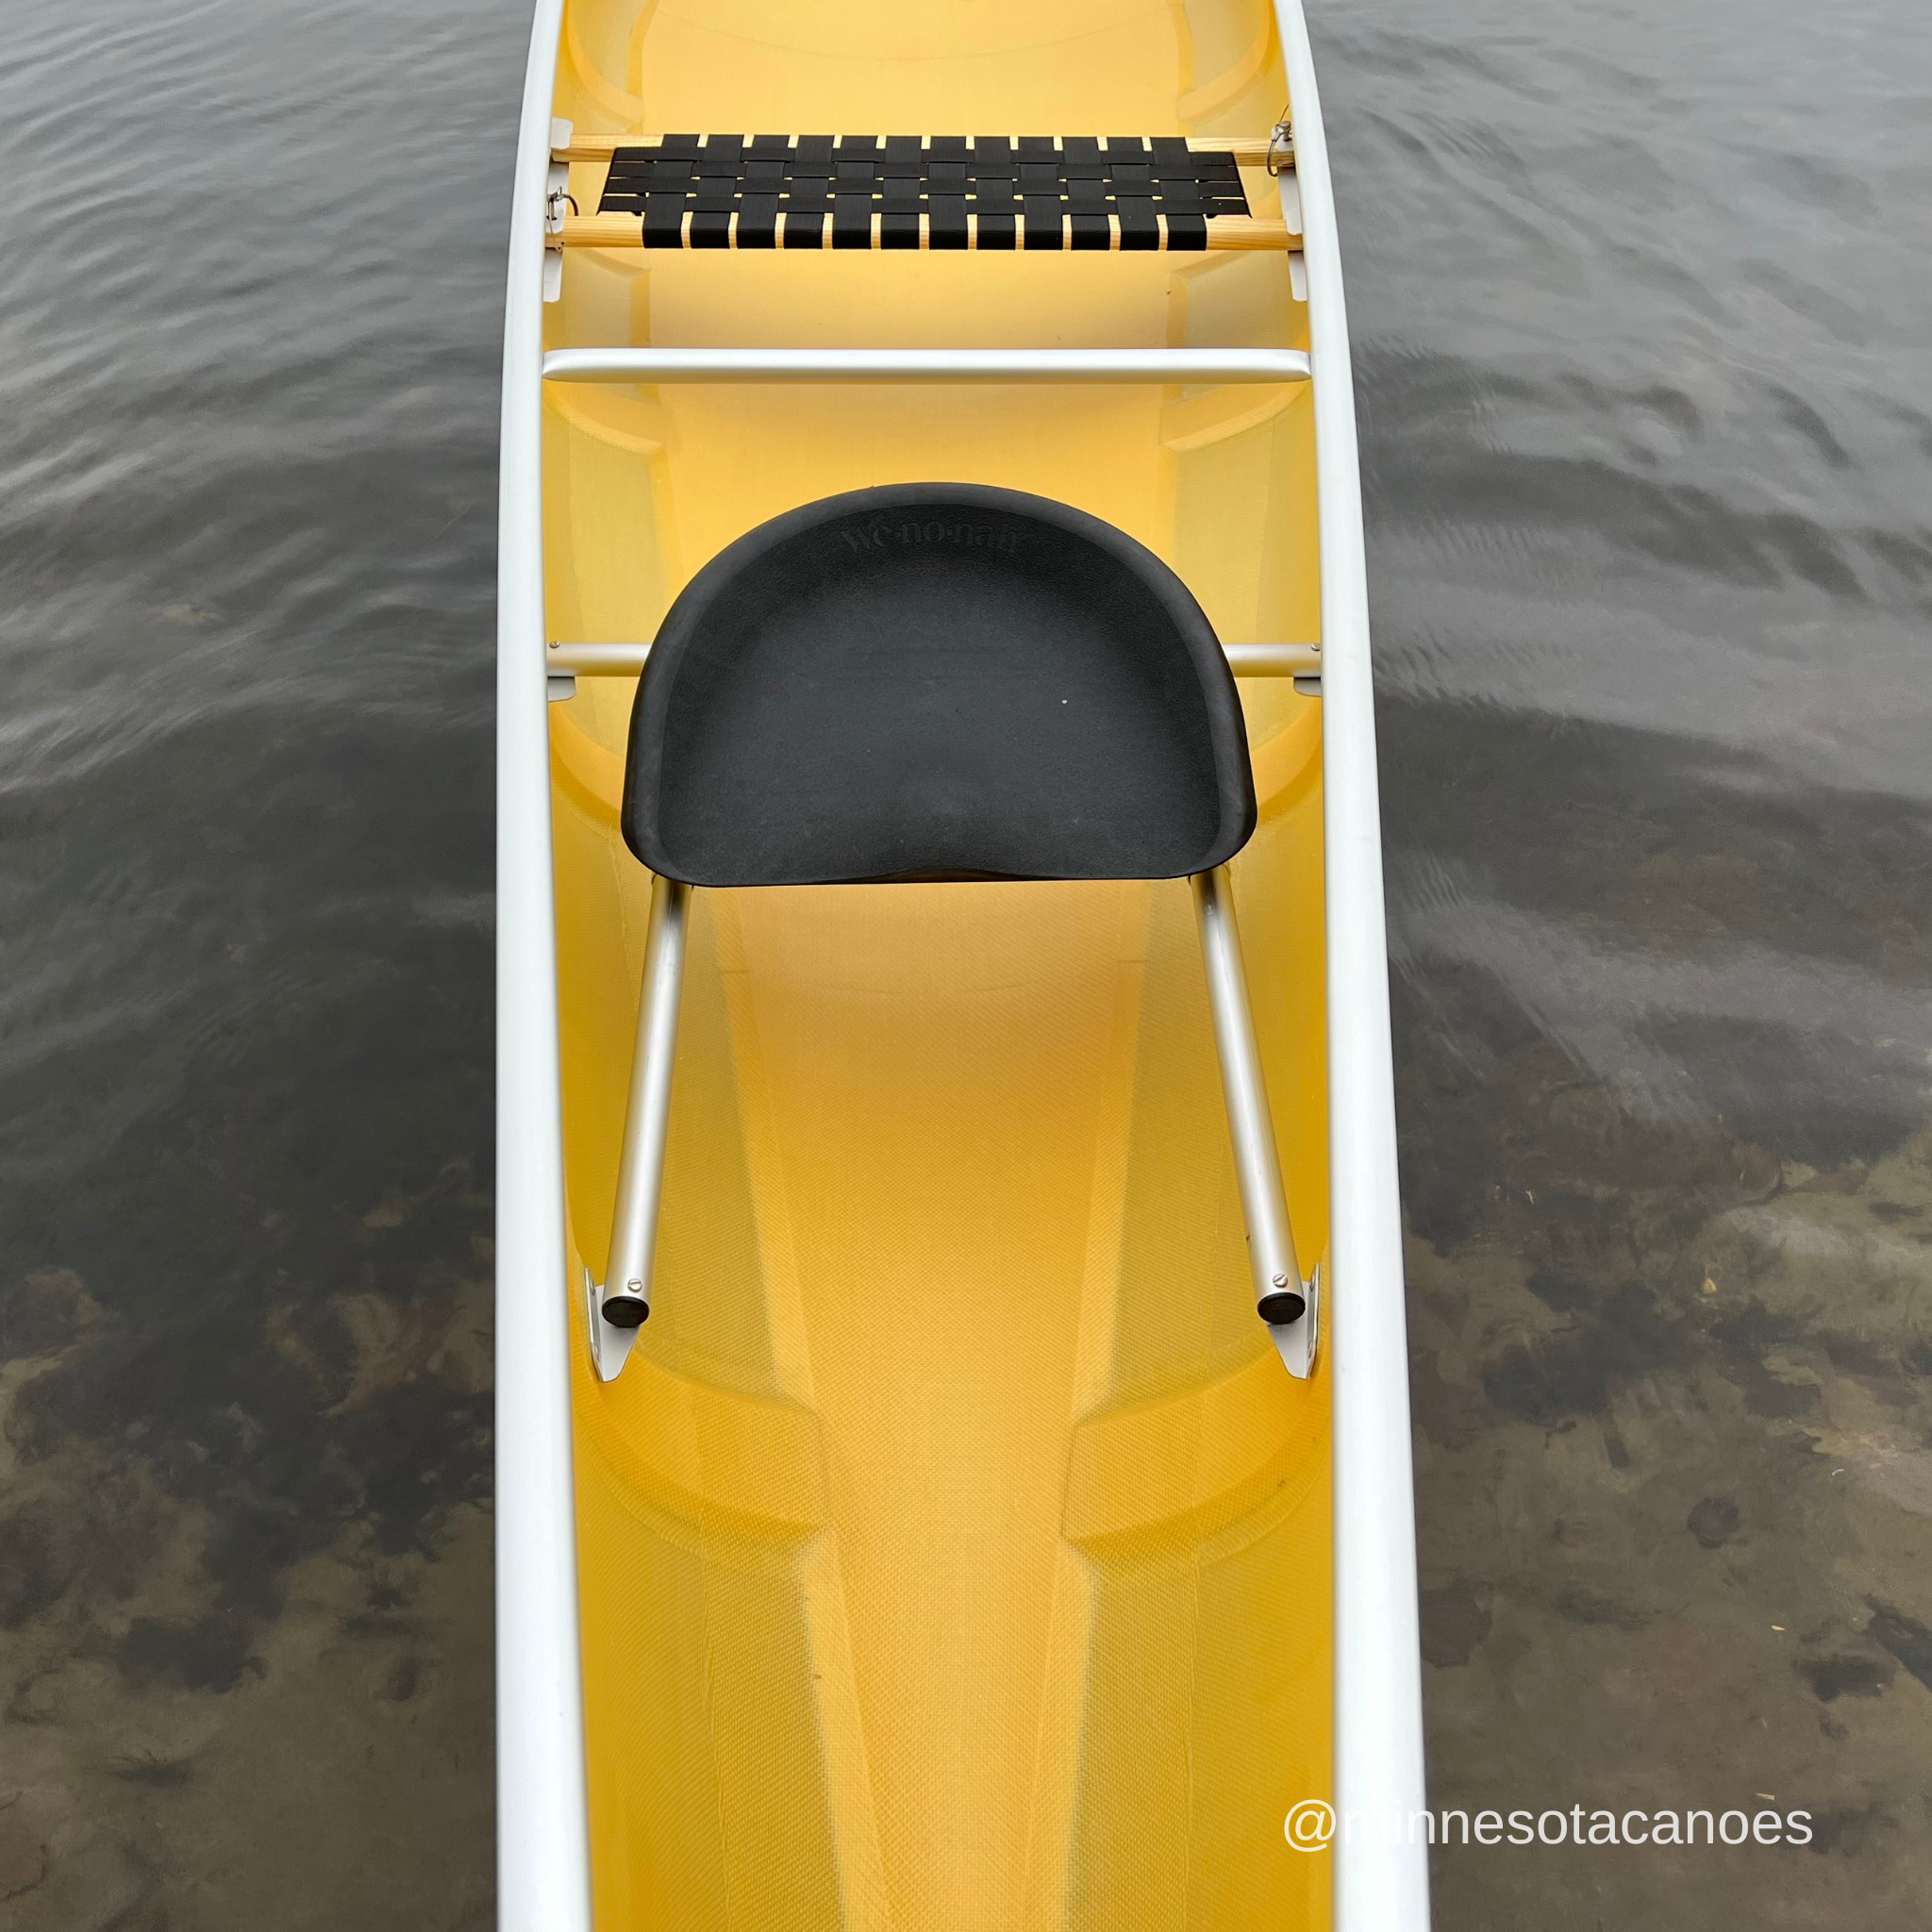 MINNESOTA 4 (23' 0") Aramid Ultra-light Tandem Wenonah Canoe with 4 Seats